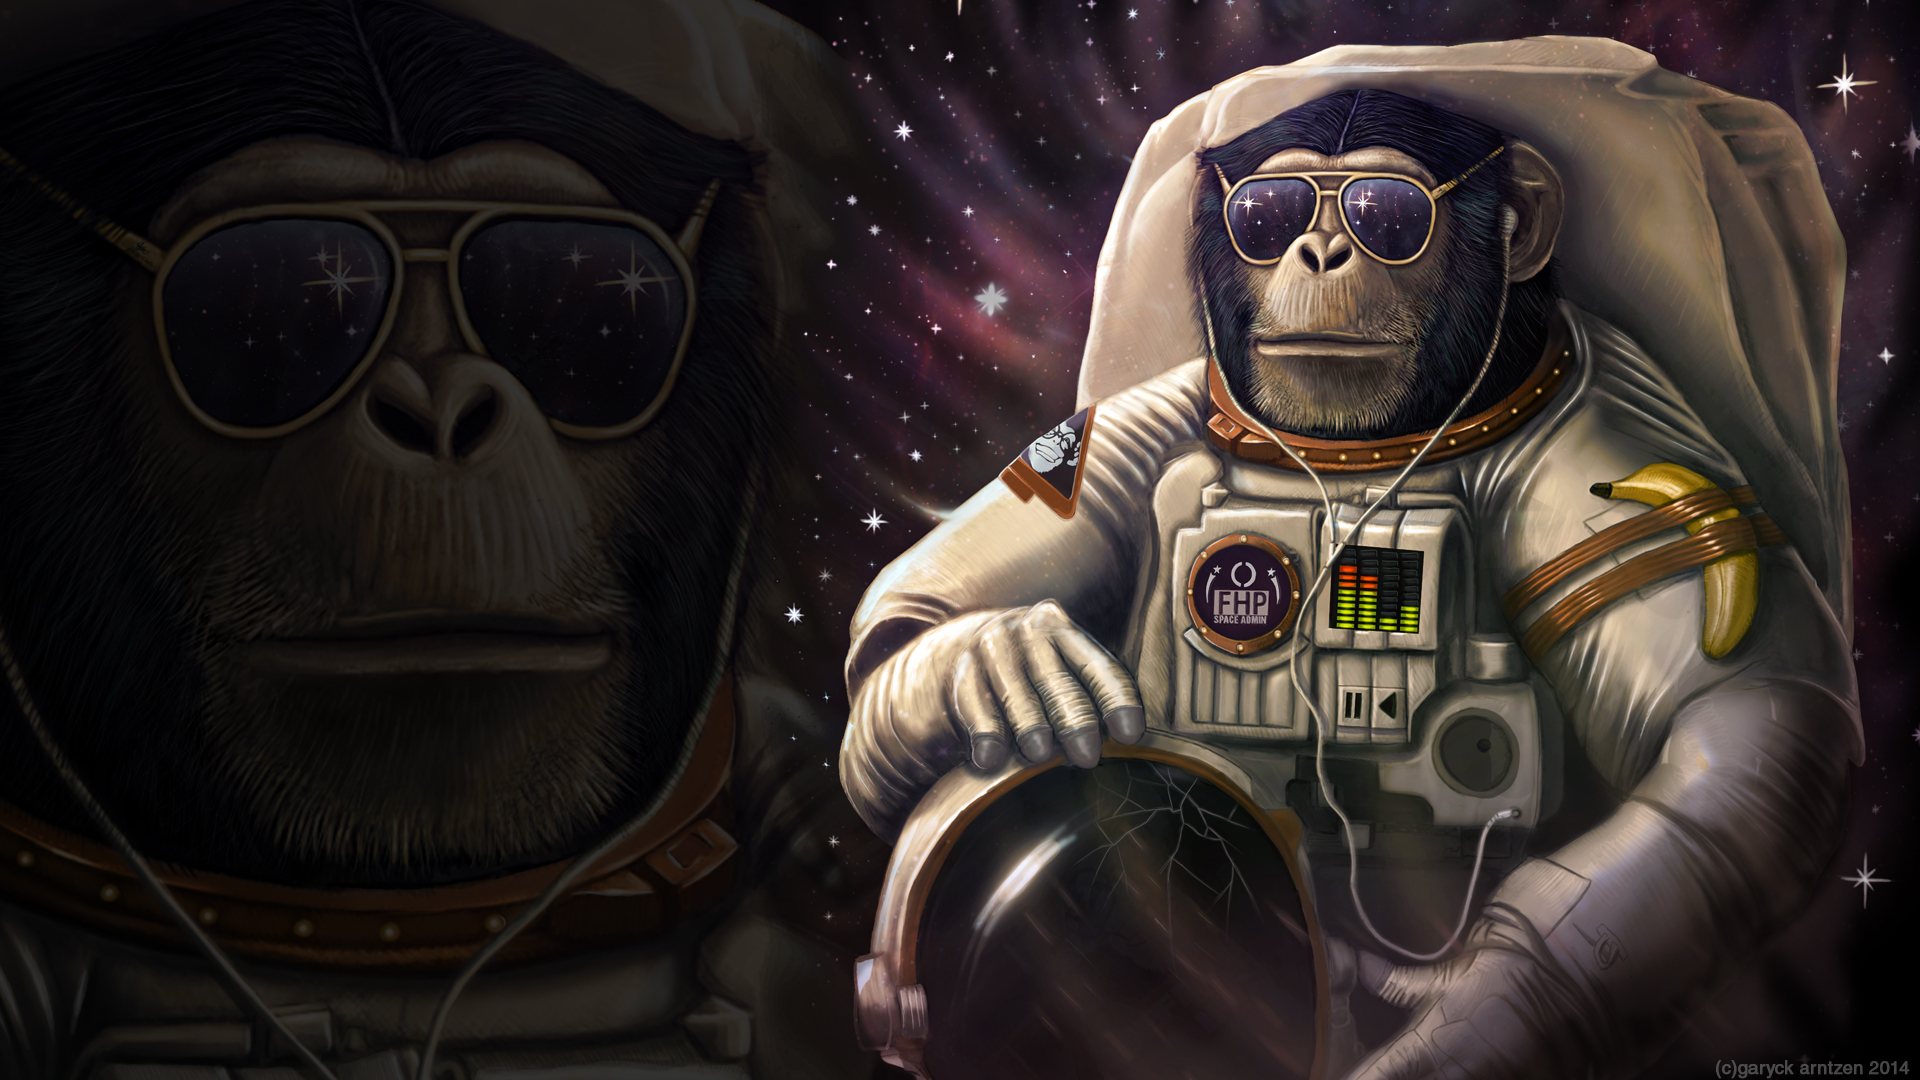 Monkey Sunglasses Astronaut WTF Banana wallpaper background